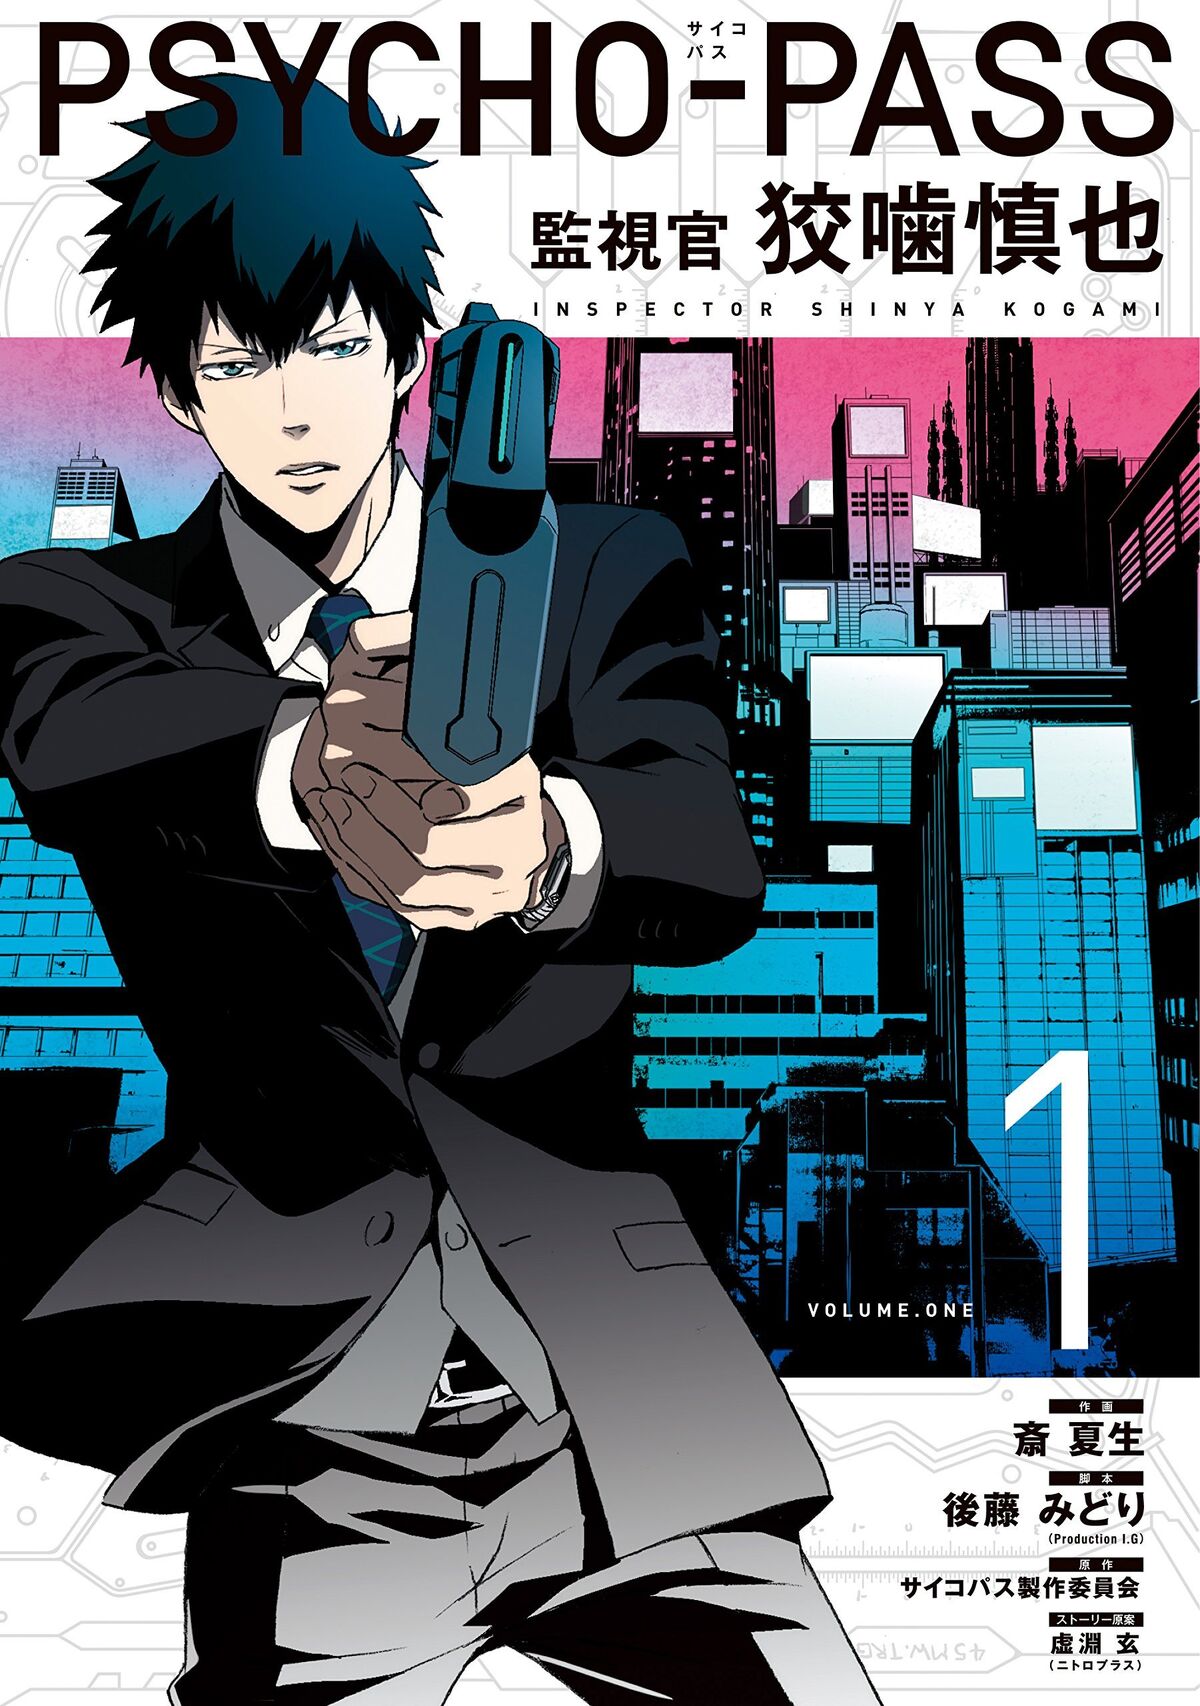 Psycho Pass: Inspector Shinya Kogami Volume 2: Gotu, Midori, Sai, Natsuo:  9781506703701: Amazon.com: Books